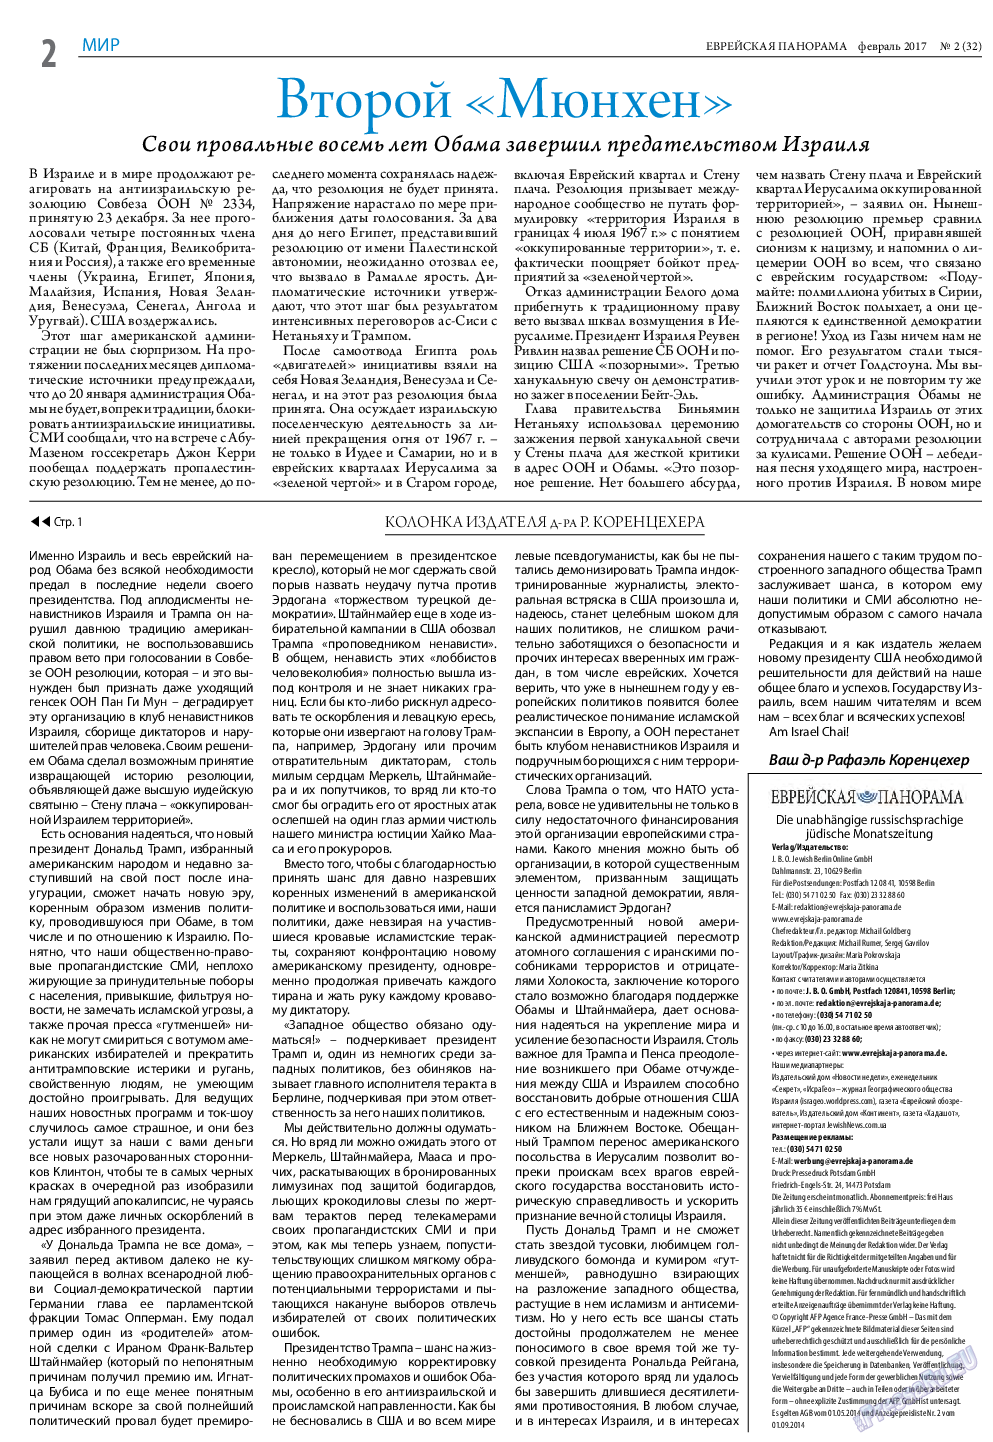 Еврейская панорама, газета. 2017 №2 стр.2